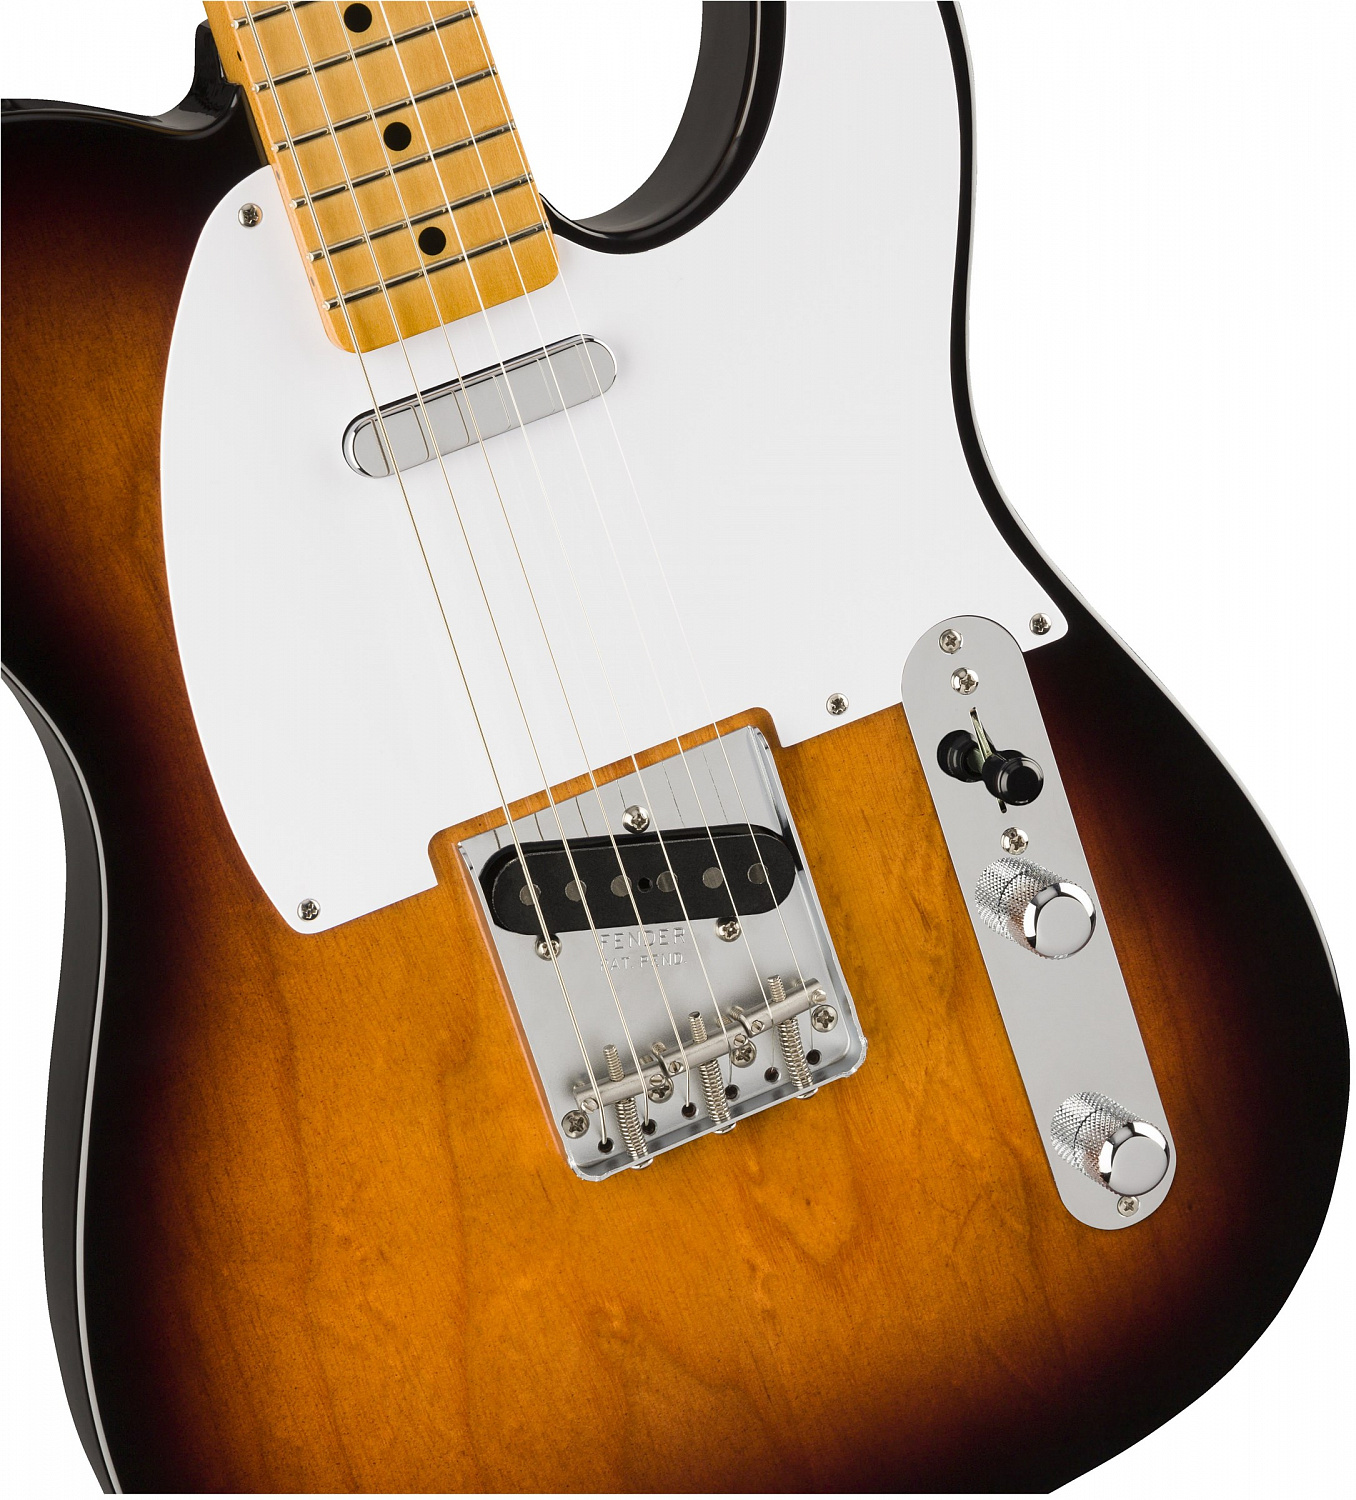 Fender Vintera '50S Telecaster 2-Color Sunburst  электрогитара, цвет санбёрст, в комплекте чехол